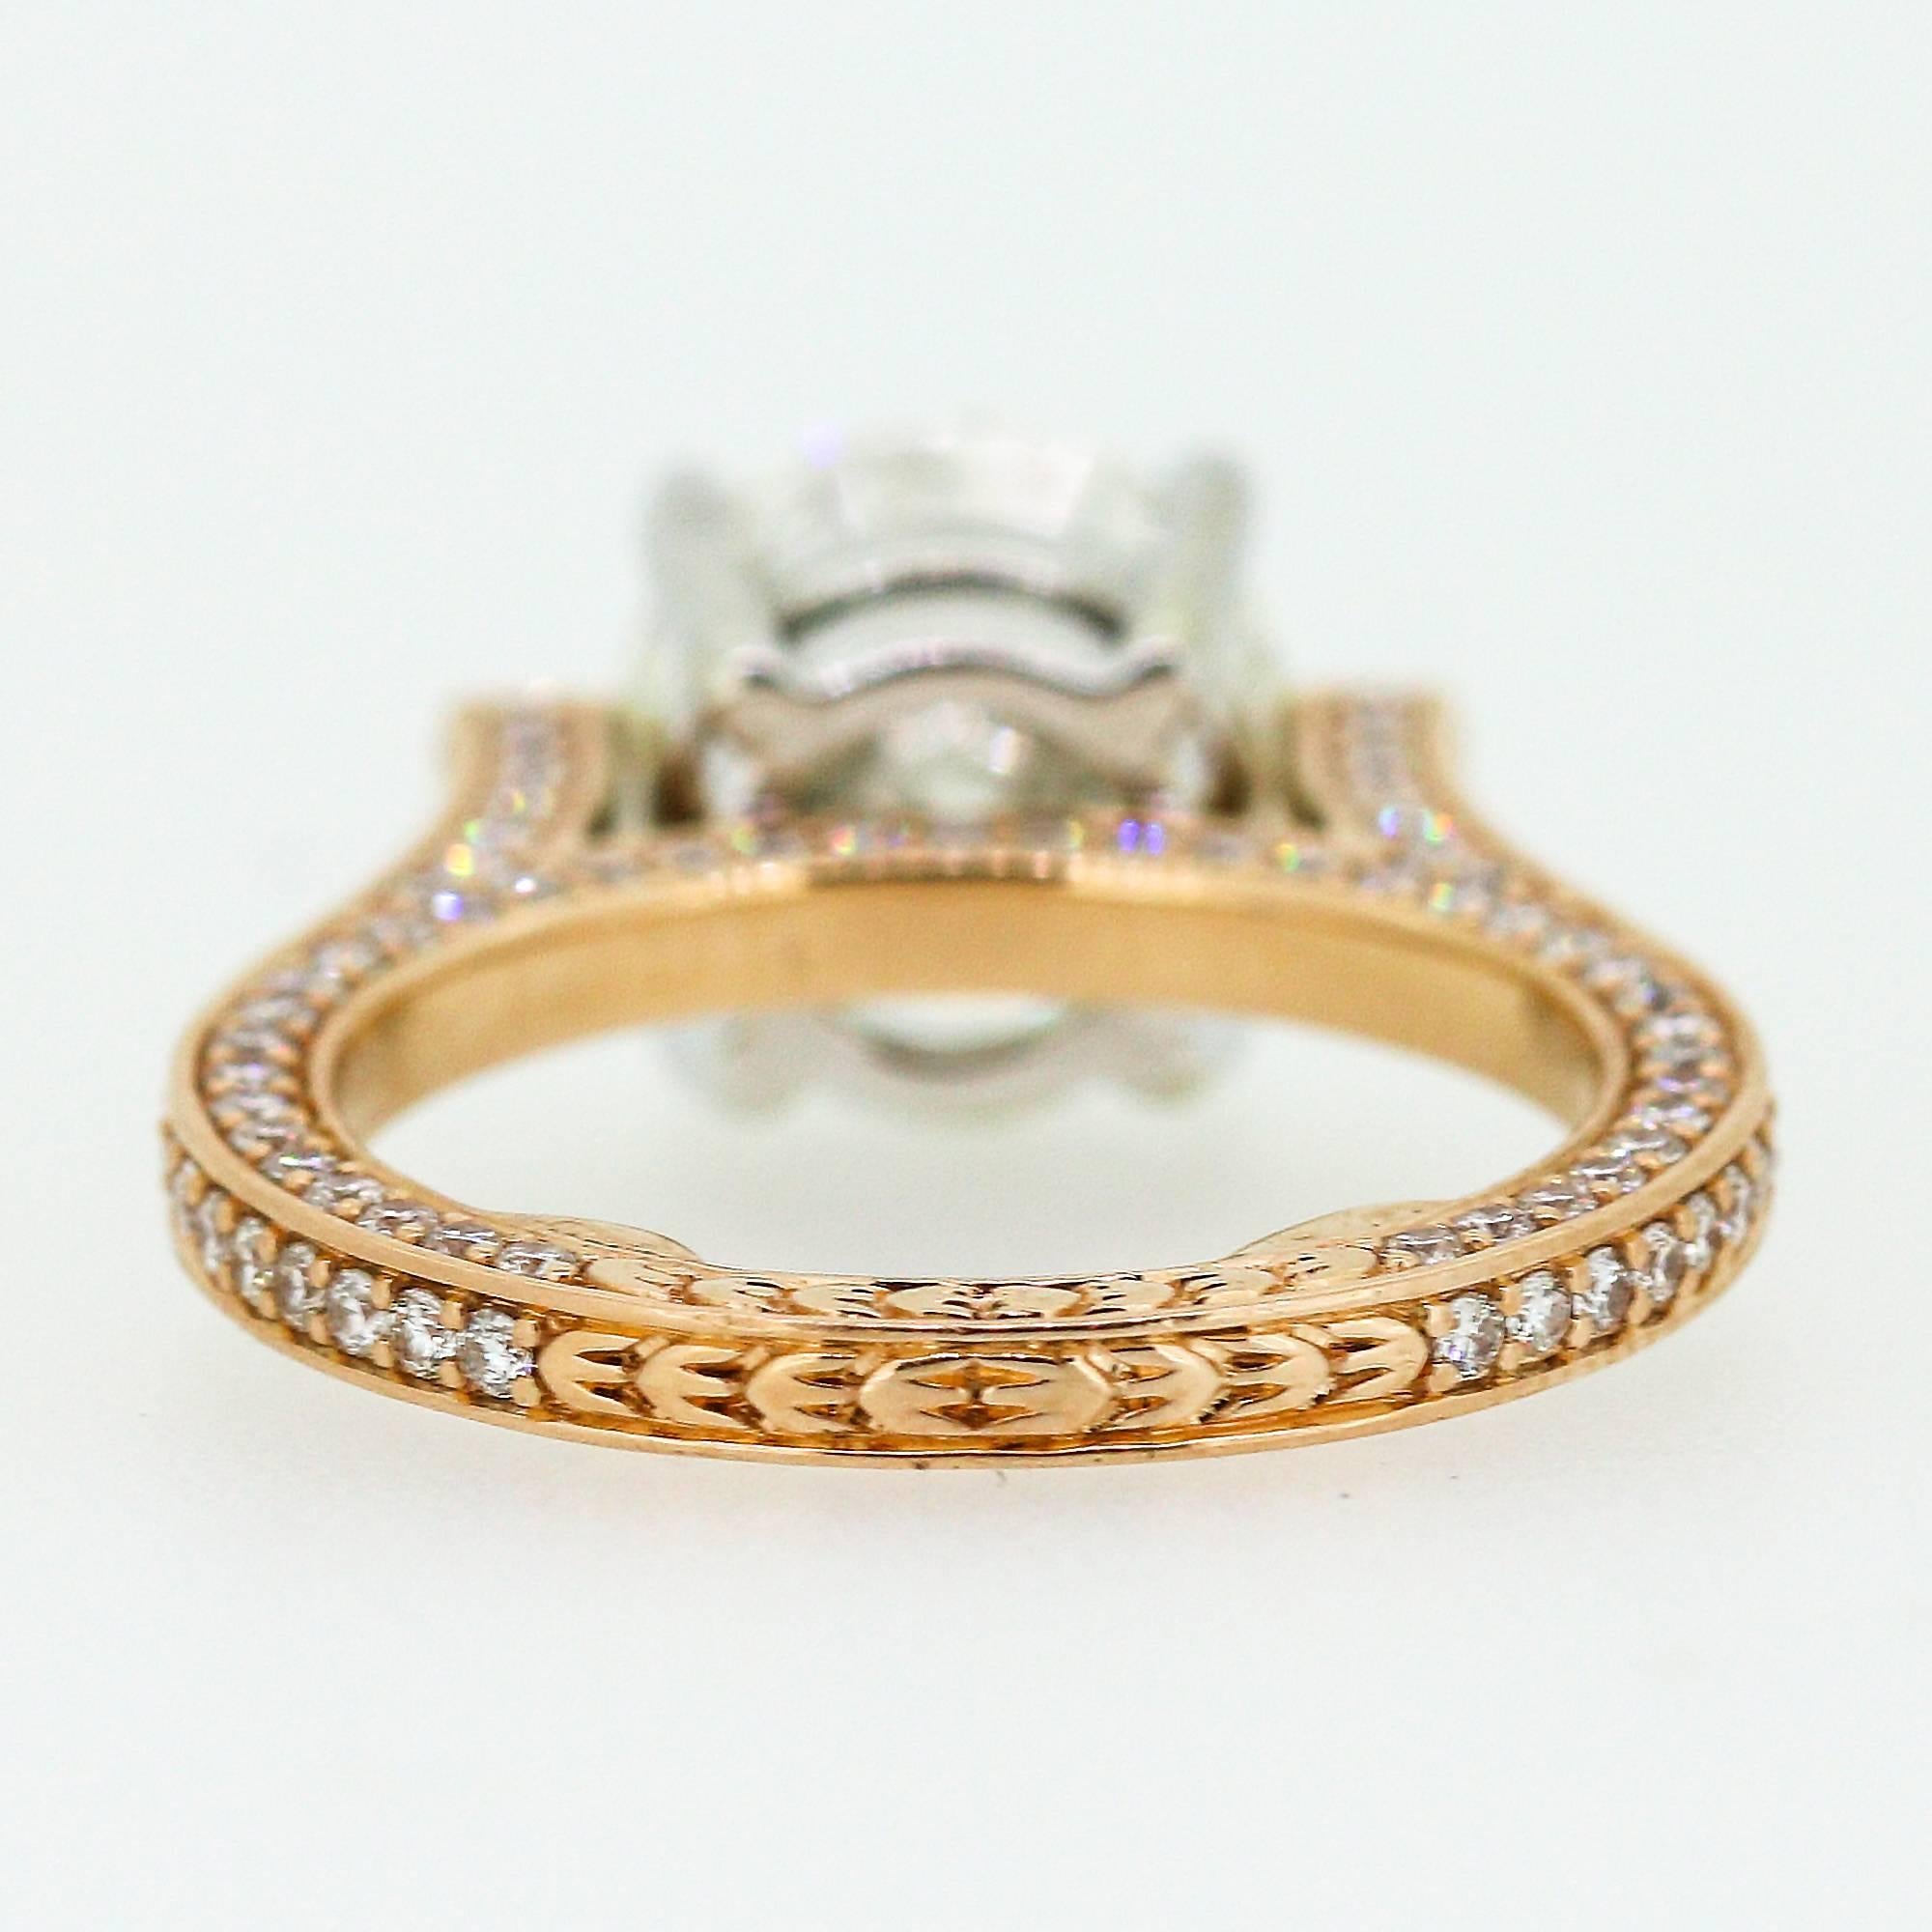 3.35 carat diamond ring